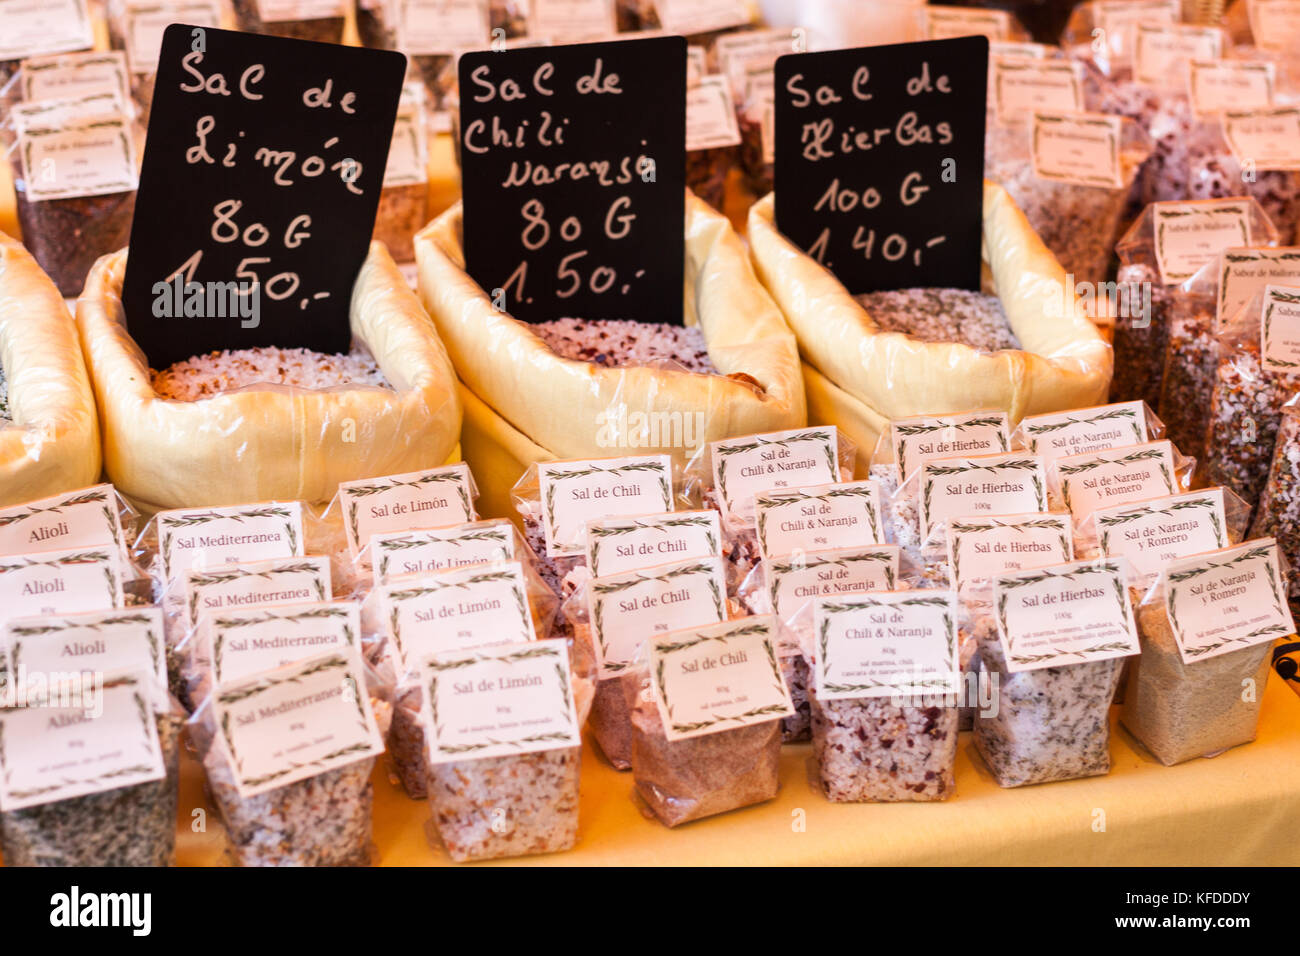 Limón sal (sal de limón), chili y naranja sal (sal de chili naranja) y sal de hierbas (sal de hierbas) para la venta en el mercado de Sineu, Mallorca, España Foto de stock